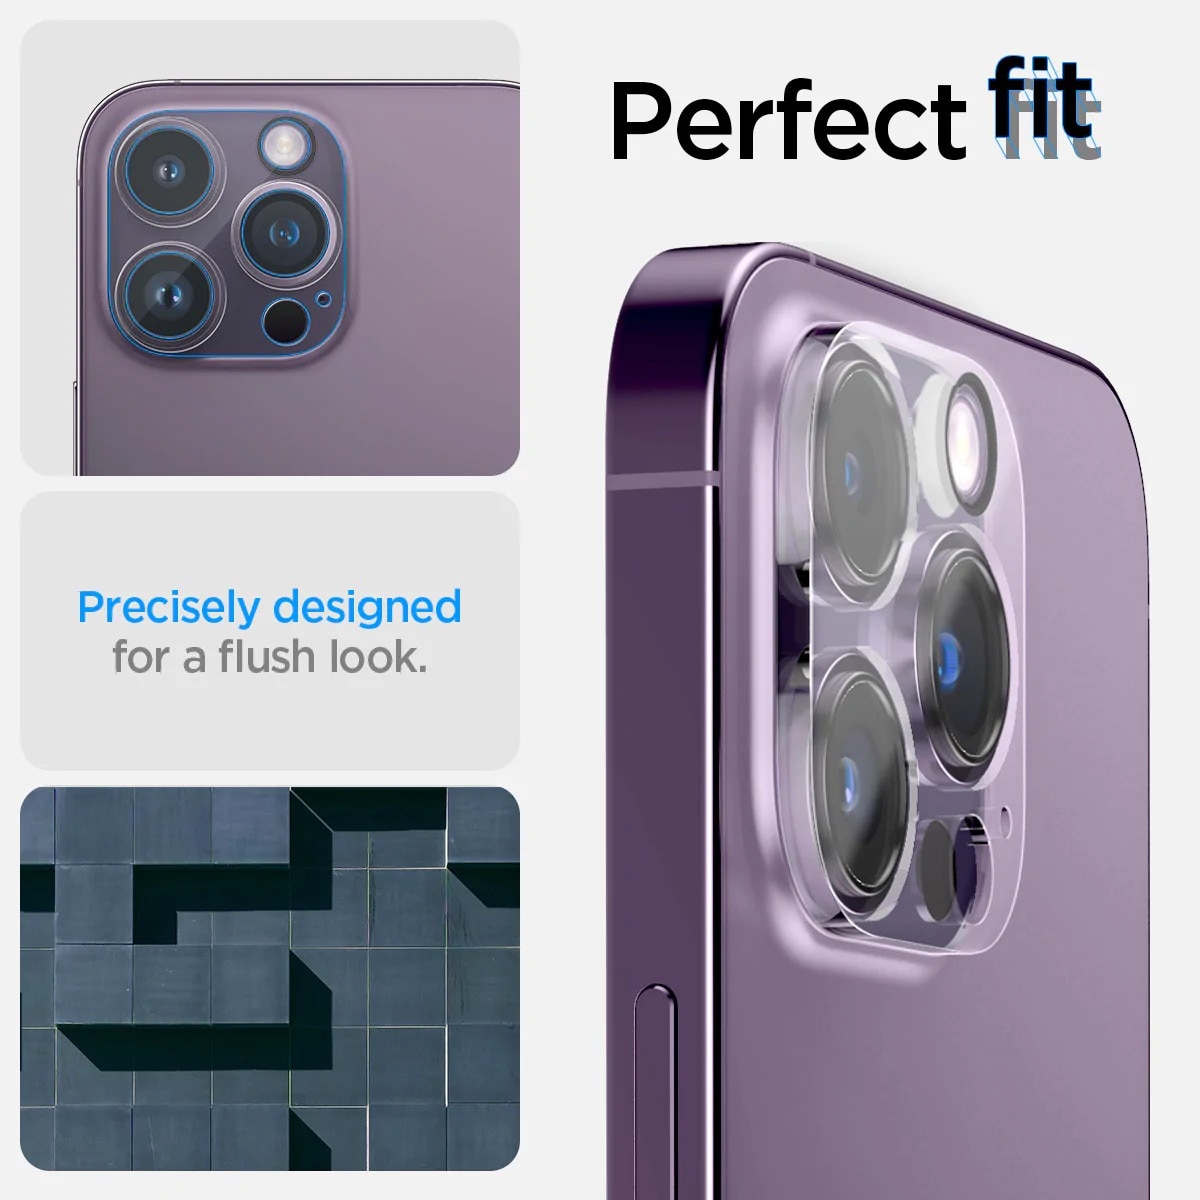 Optik Lens Protector (2 piezas) iPhone 14 Pro Max Crystal Clear